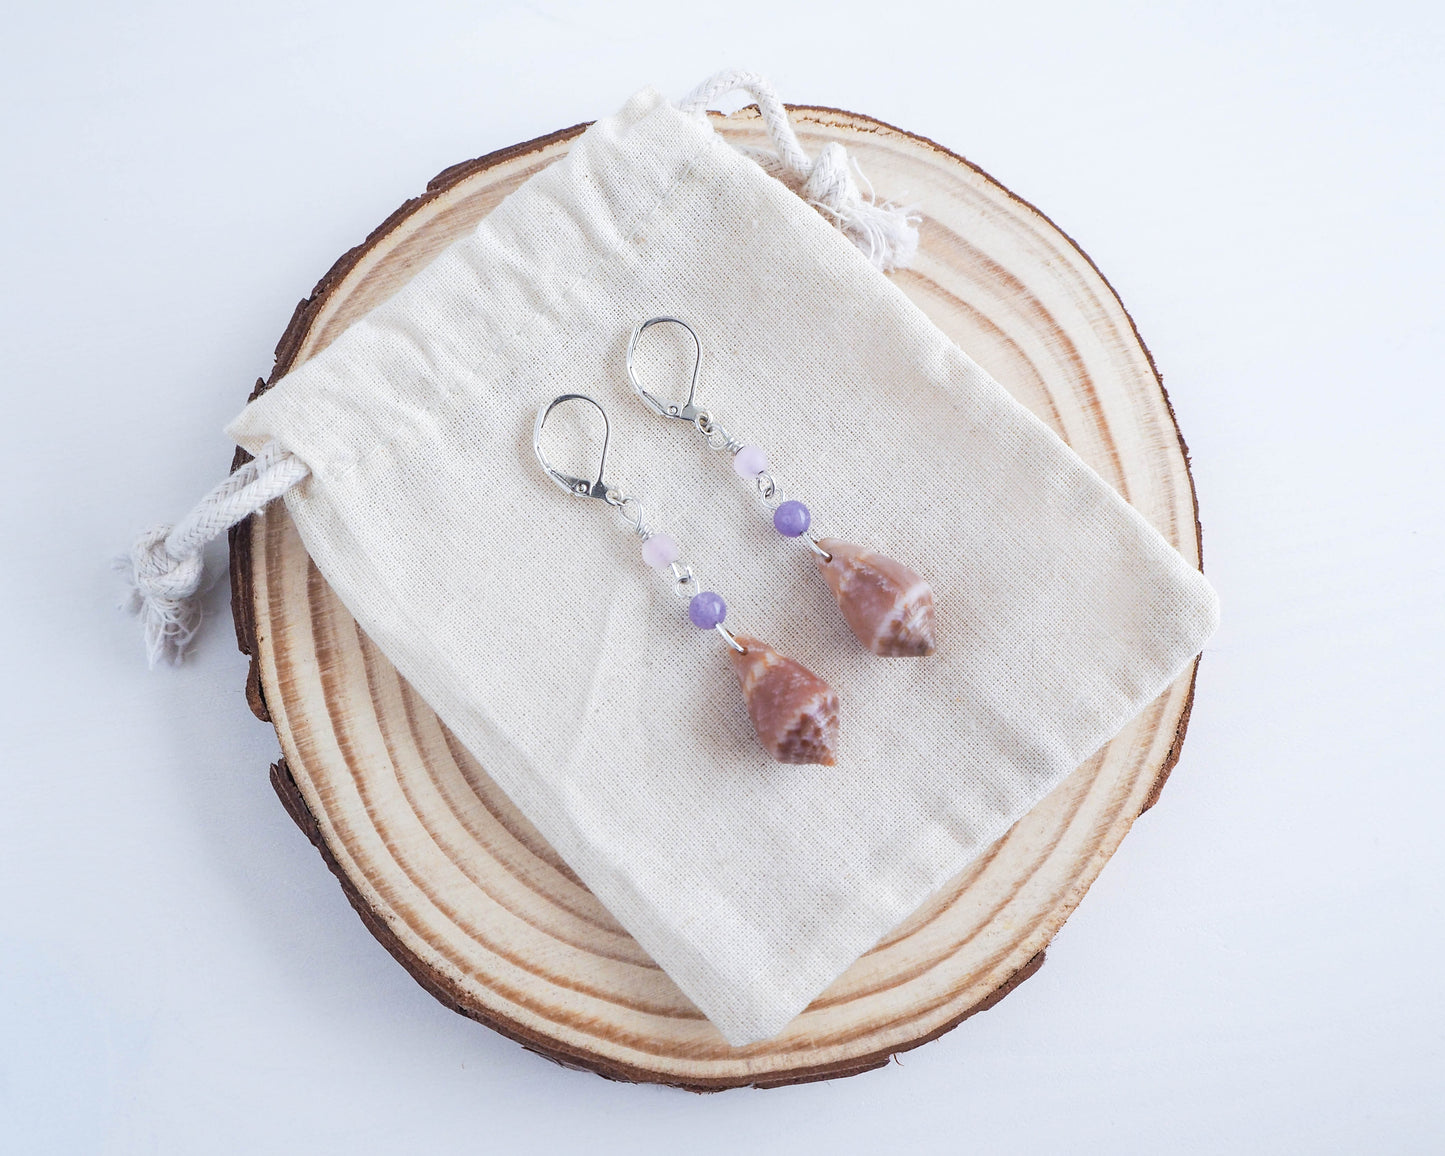 Unique Handmade Earrings - Cone Shell Design with Gemstone amethyst rose quartz